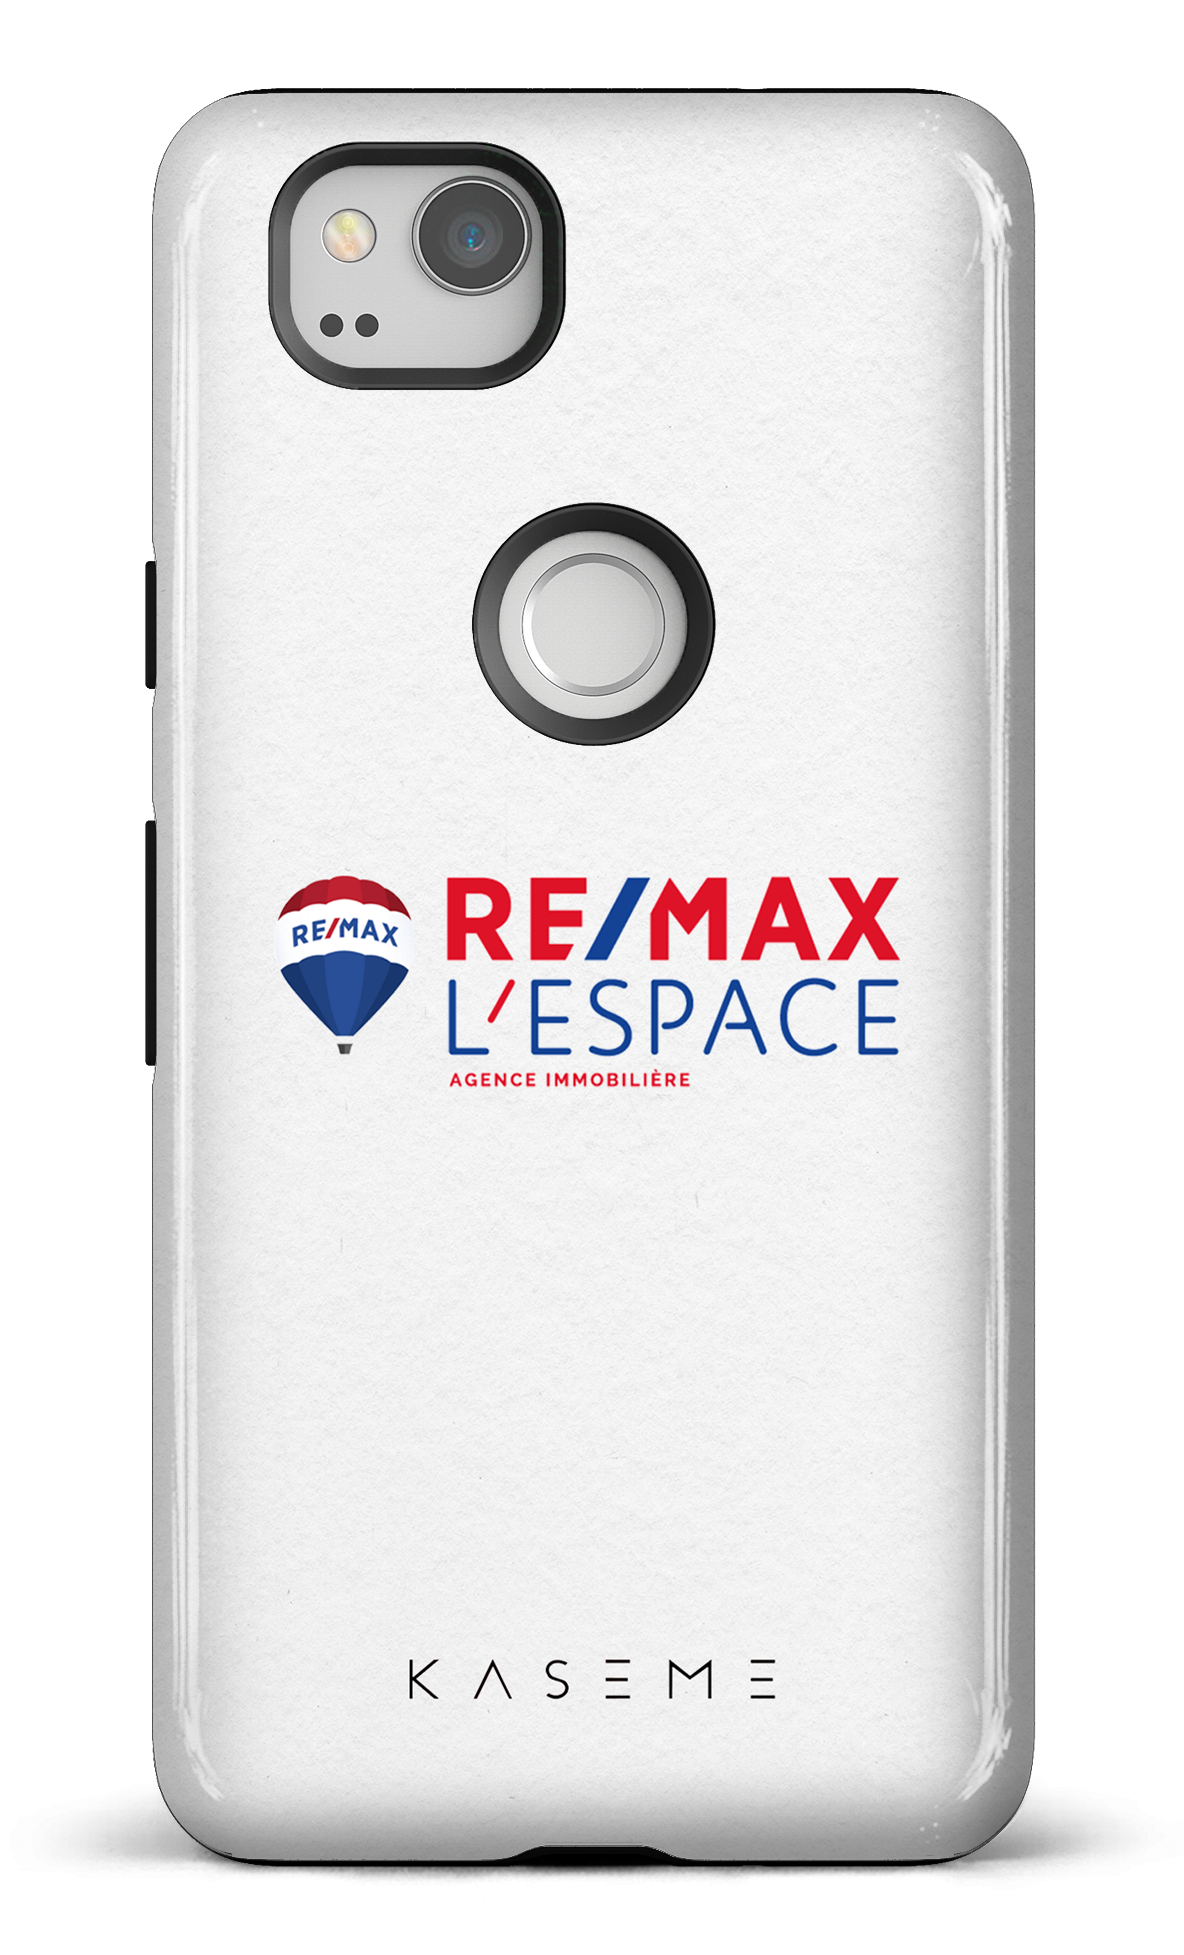 Remax L'Espace Blanc - Google Pixel 2